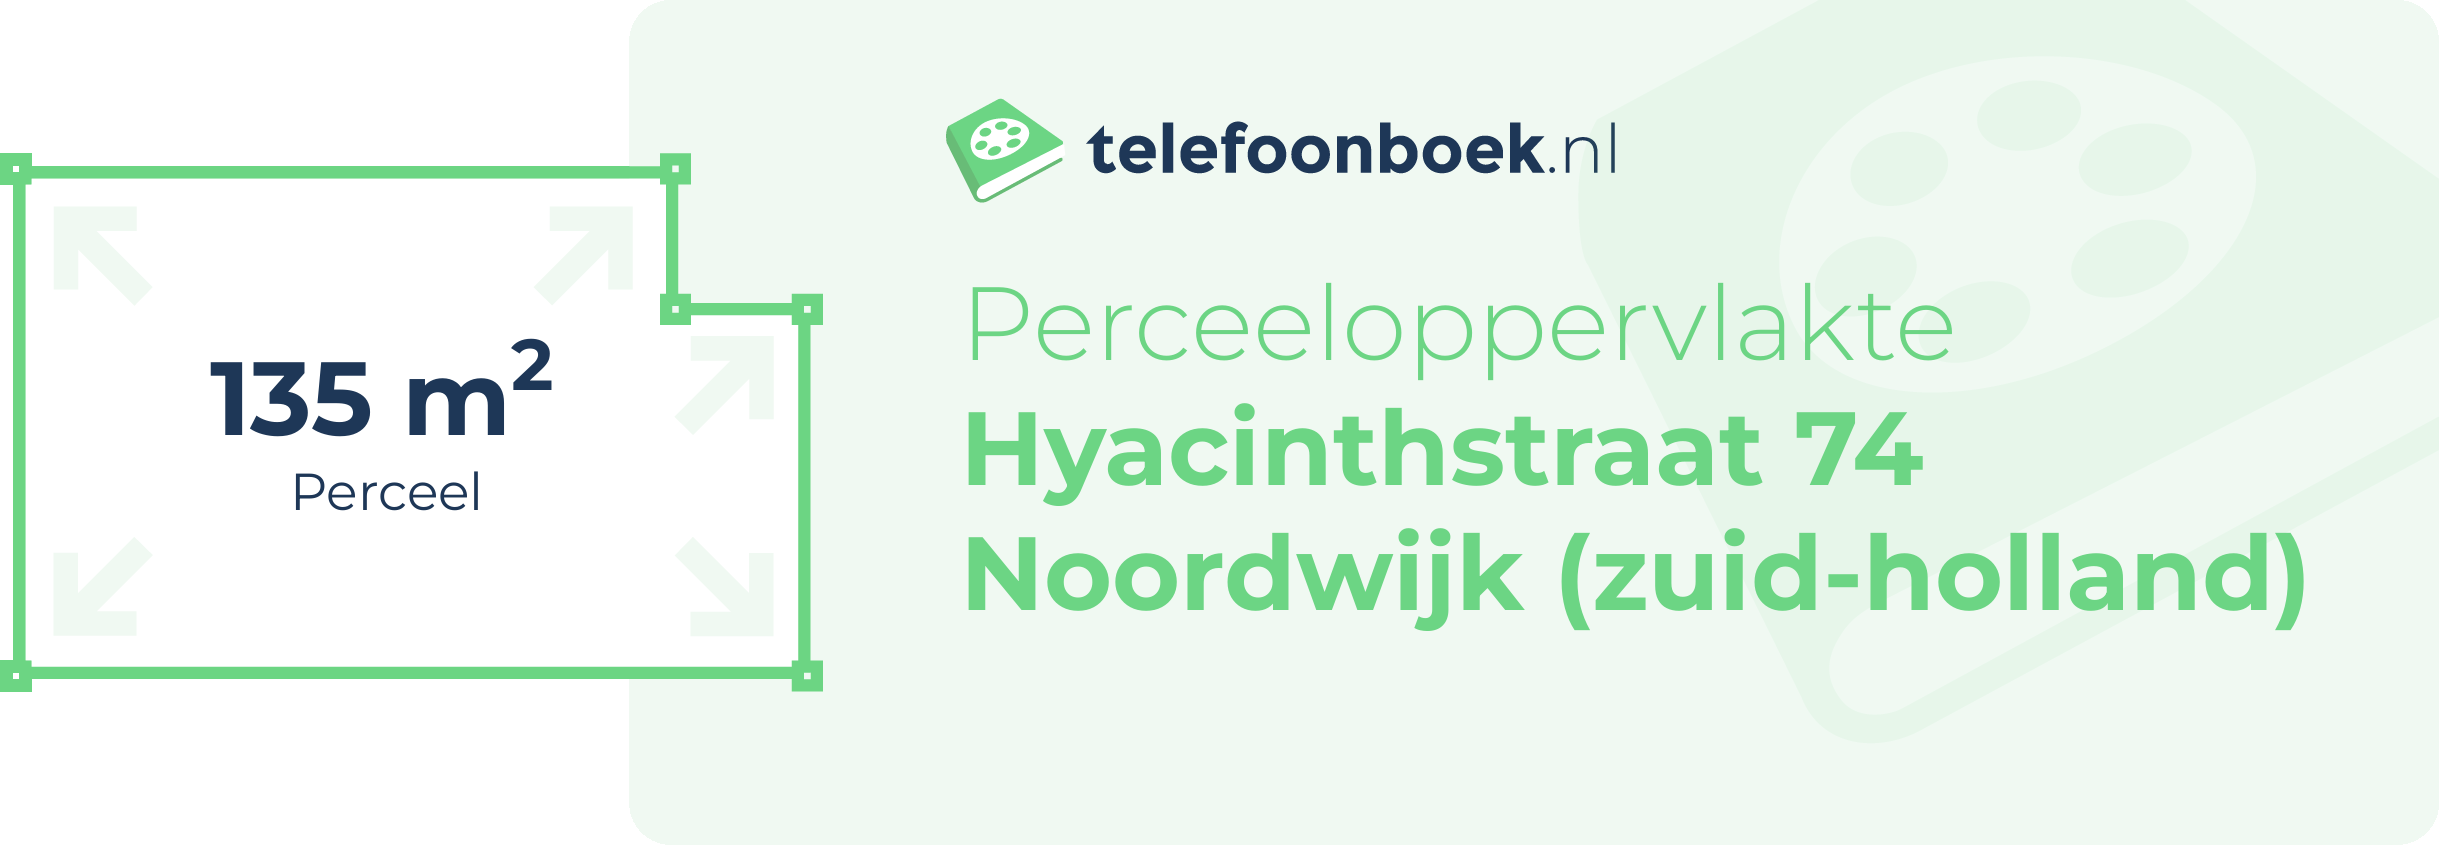 Perceeloppervlakte Hyacinthstraat 74 Noordwijk (Zuid-Holland)